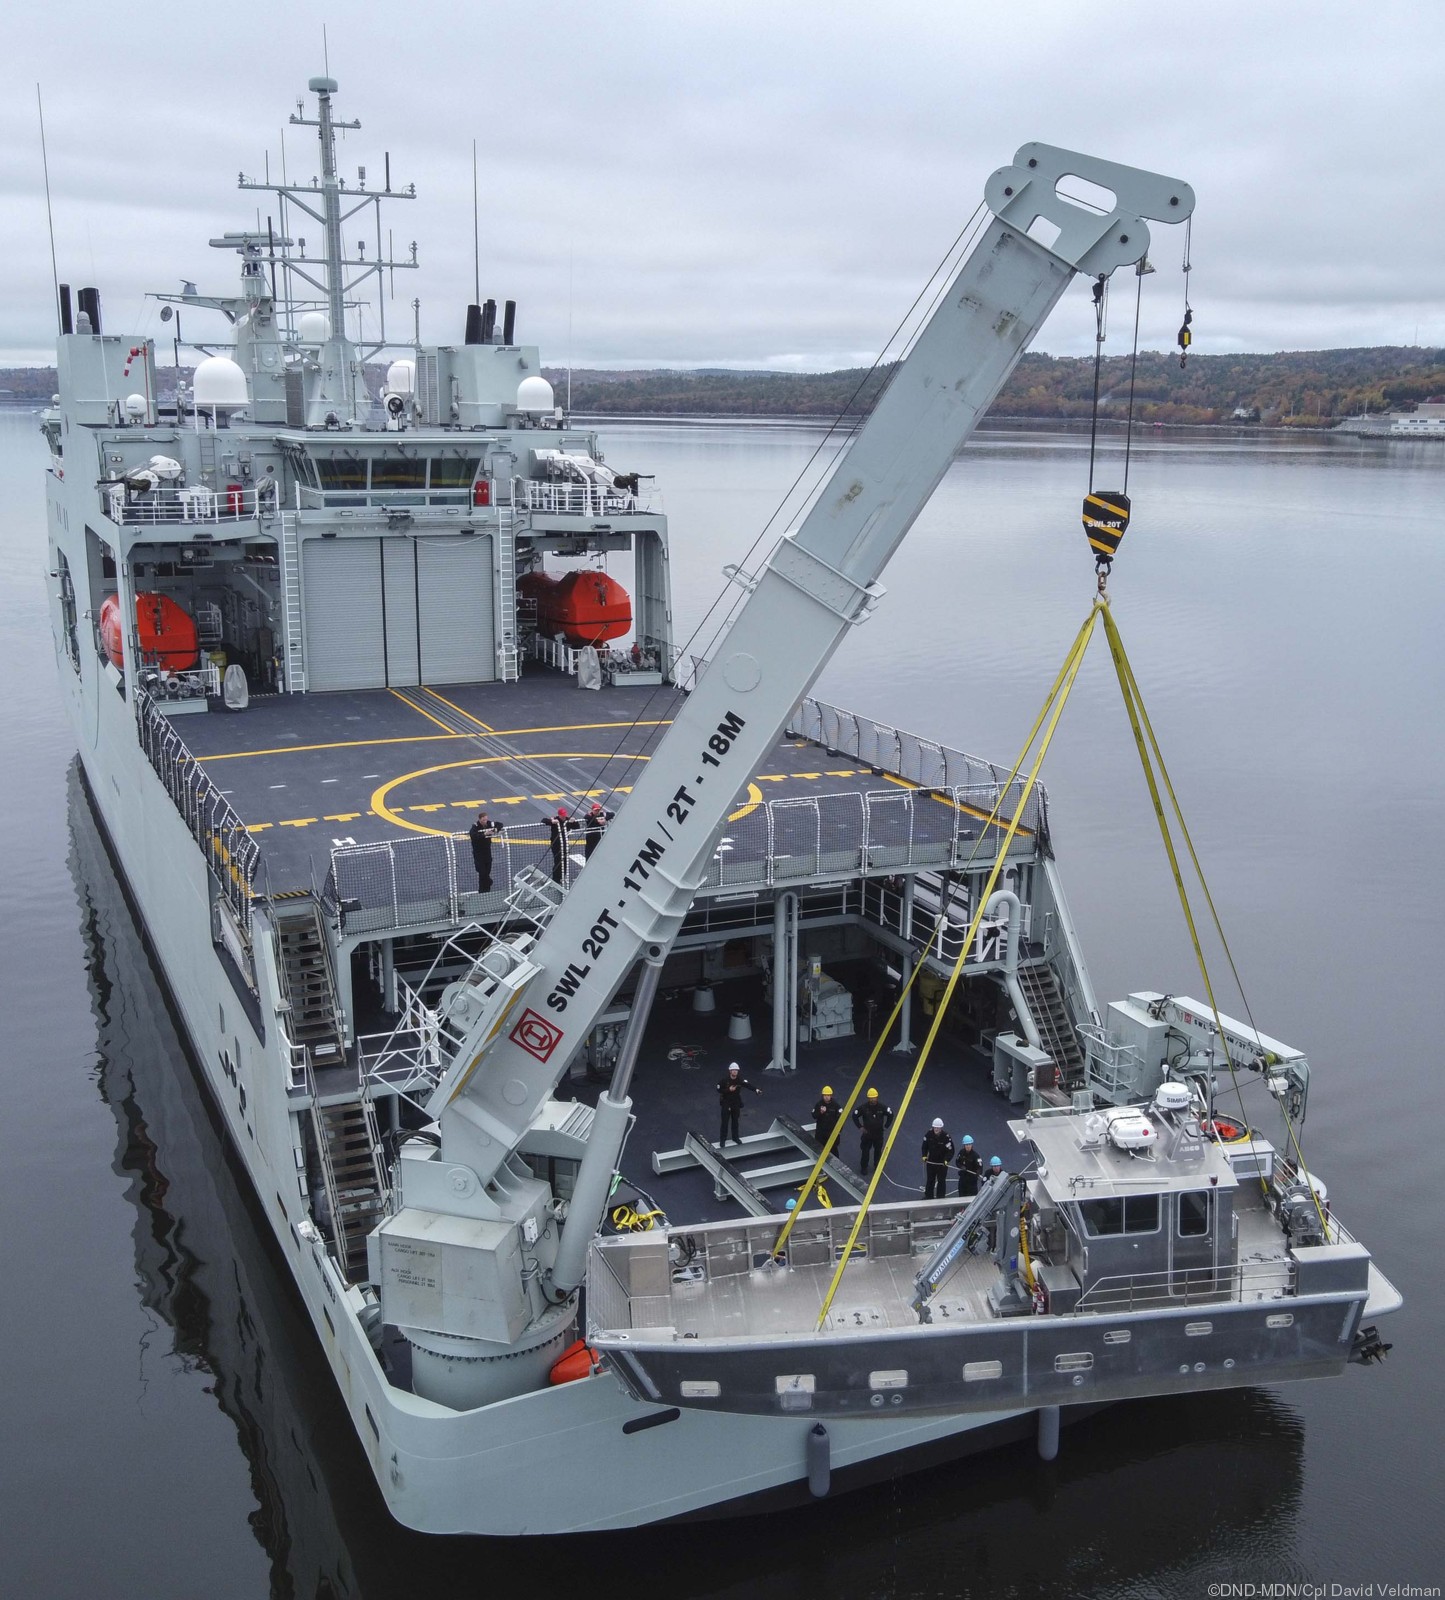 aopv-430 hmcs harry dewolf arctic offshore patrol vessel ncsm royal canadian navy 16 swl crane